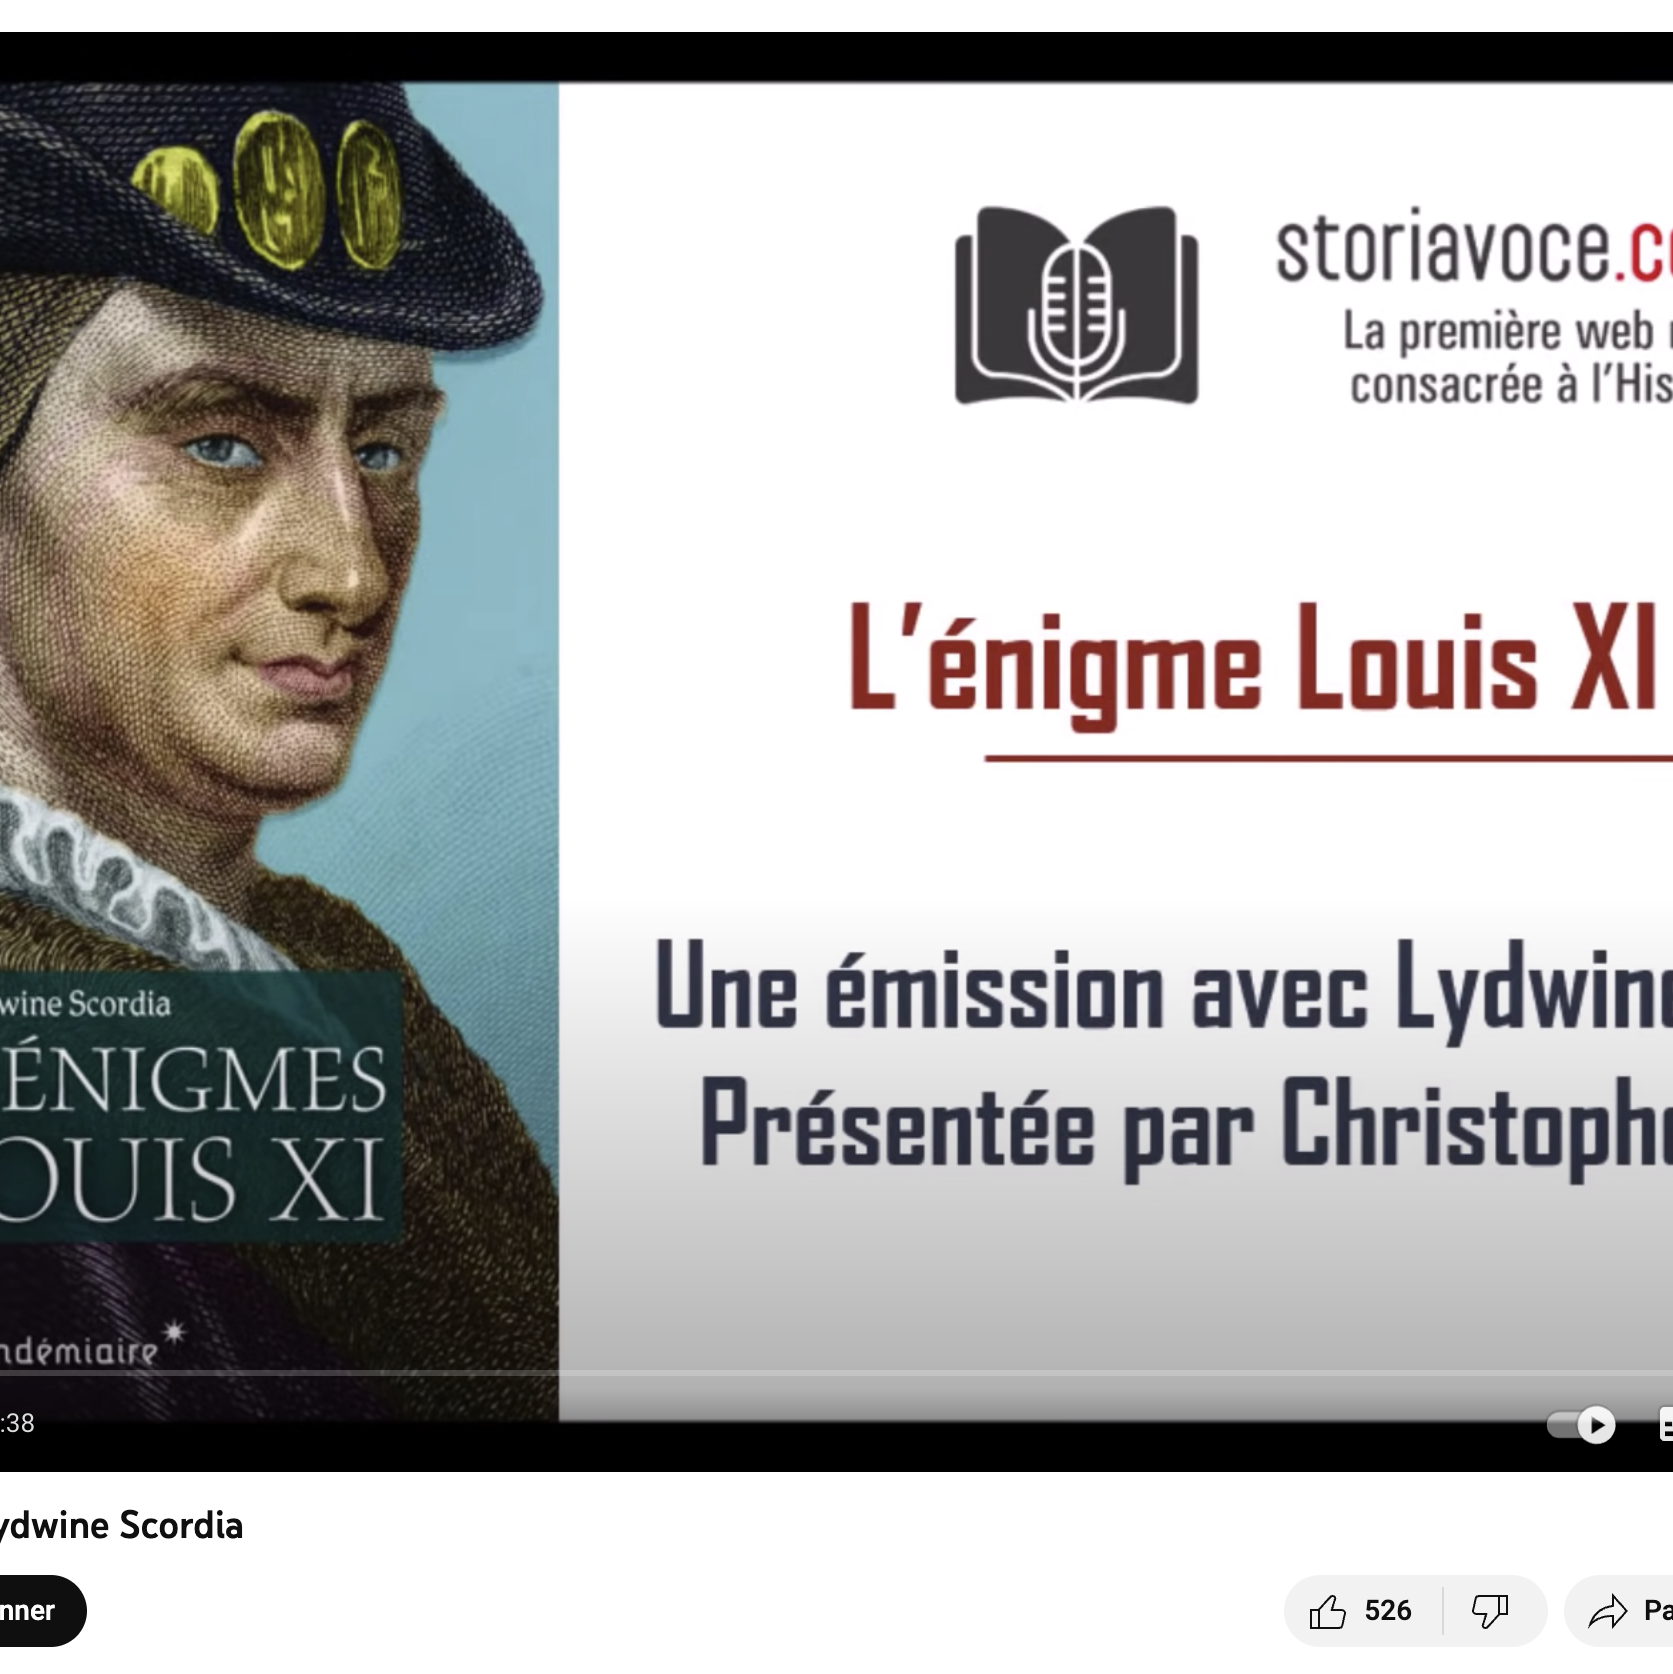 'énigme Louis XI, avec Lydwine Scordia

Storiavoce

